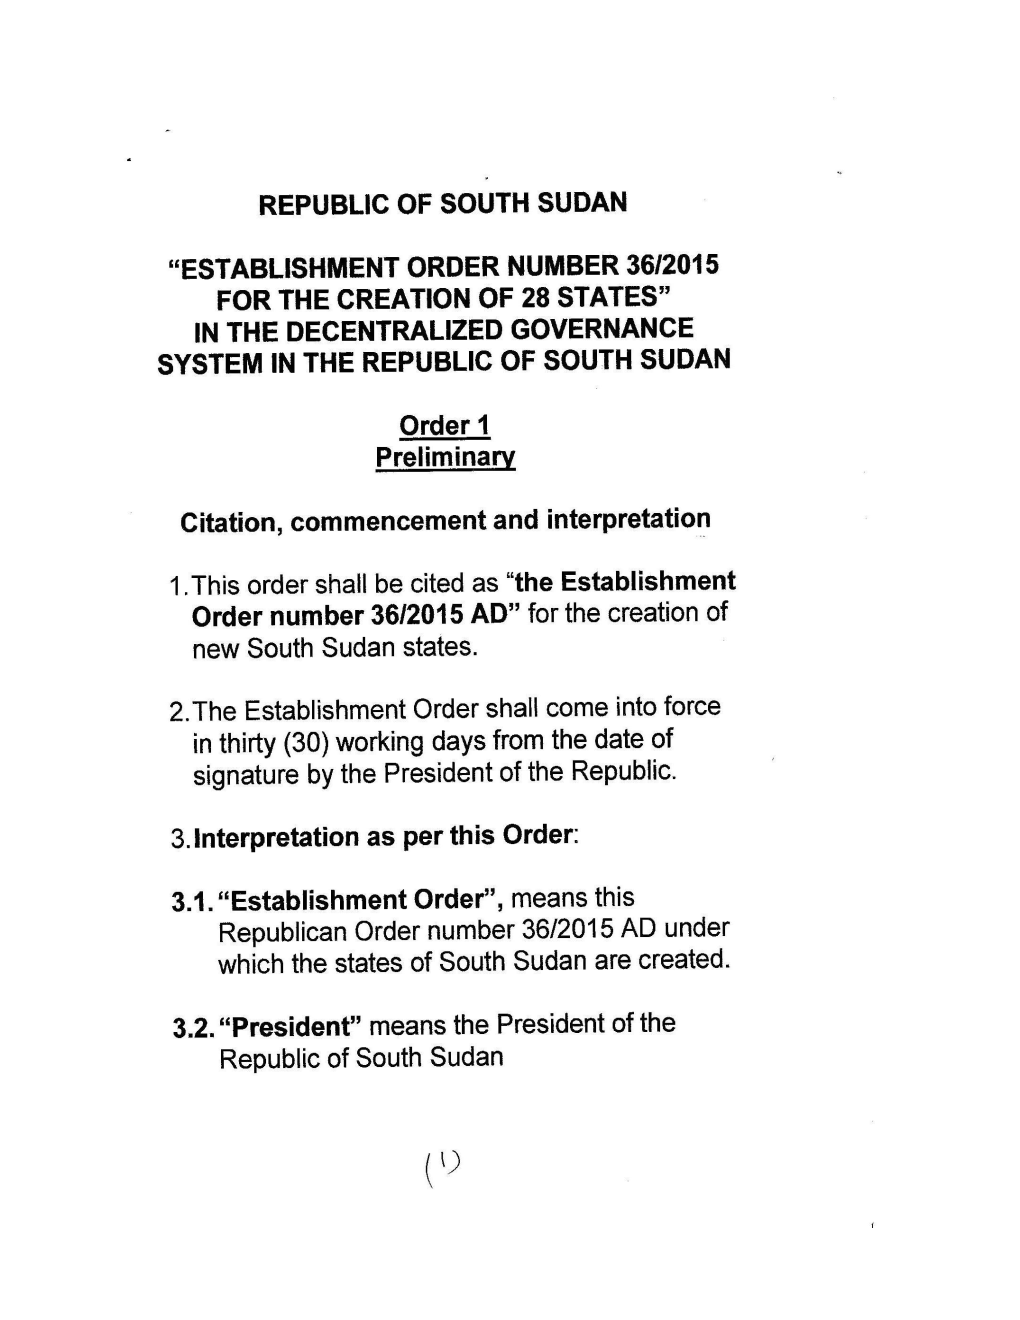 Republic of South Sudan "Establishment Order